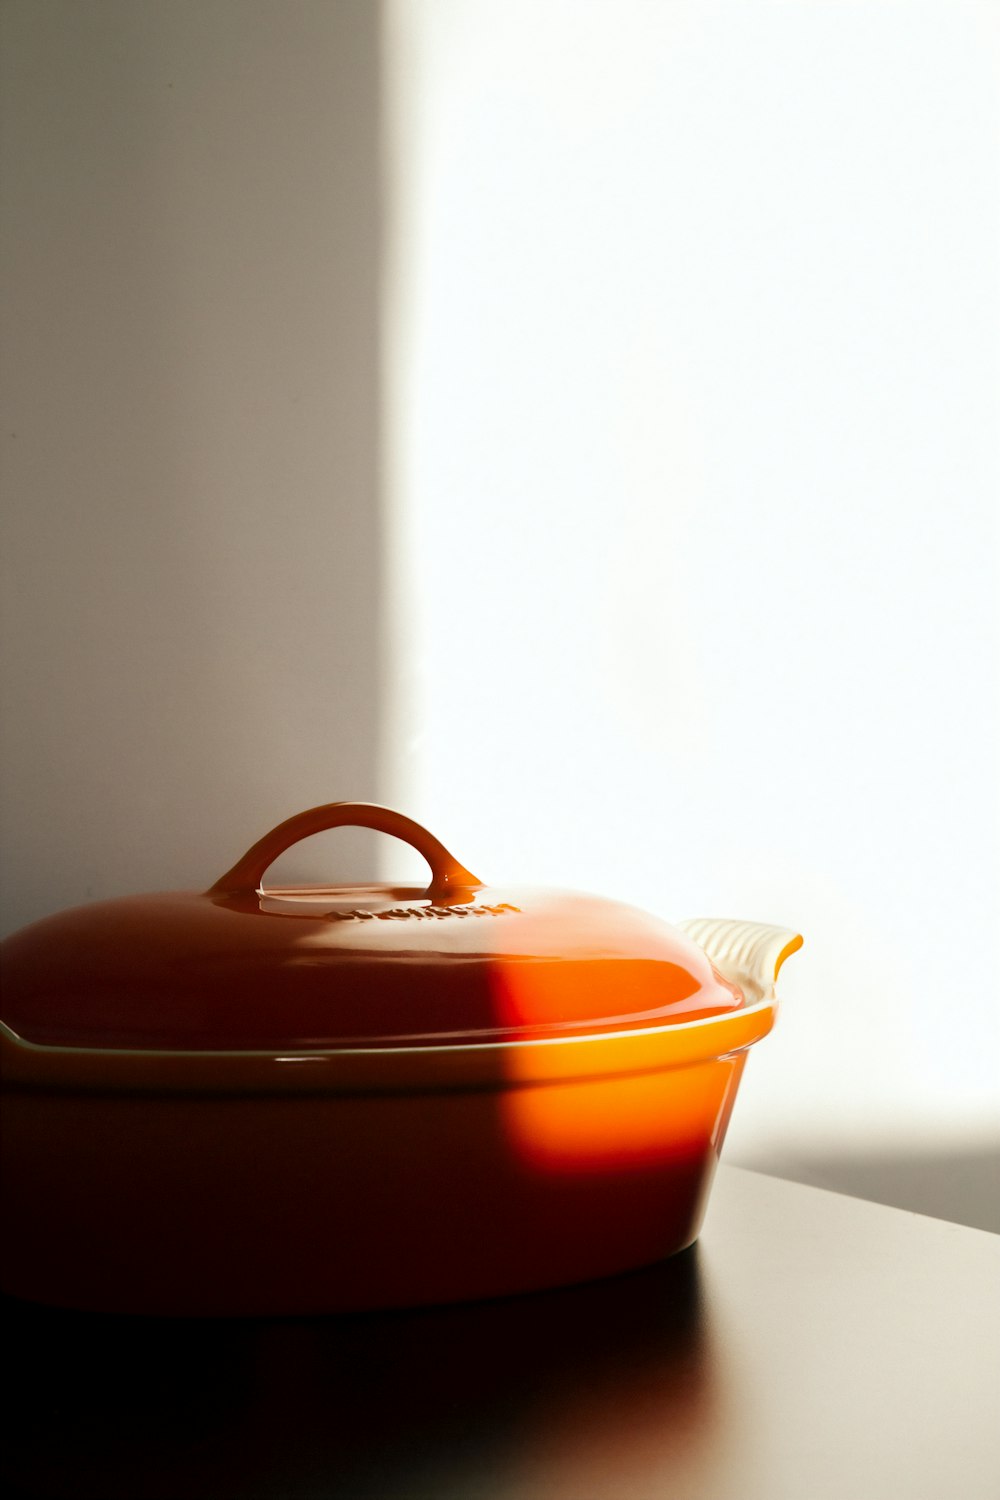 orange cooking pot on brown wooden surface